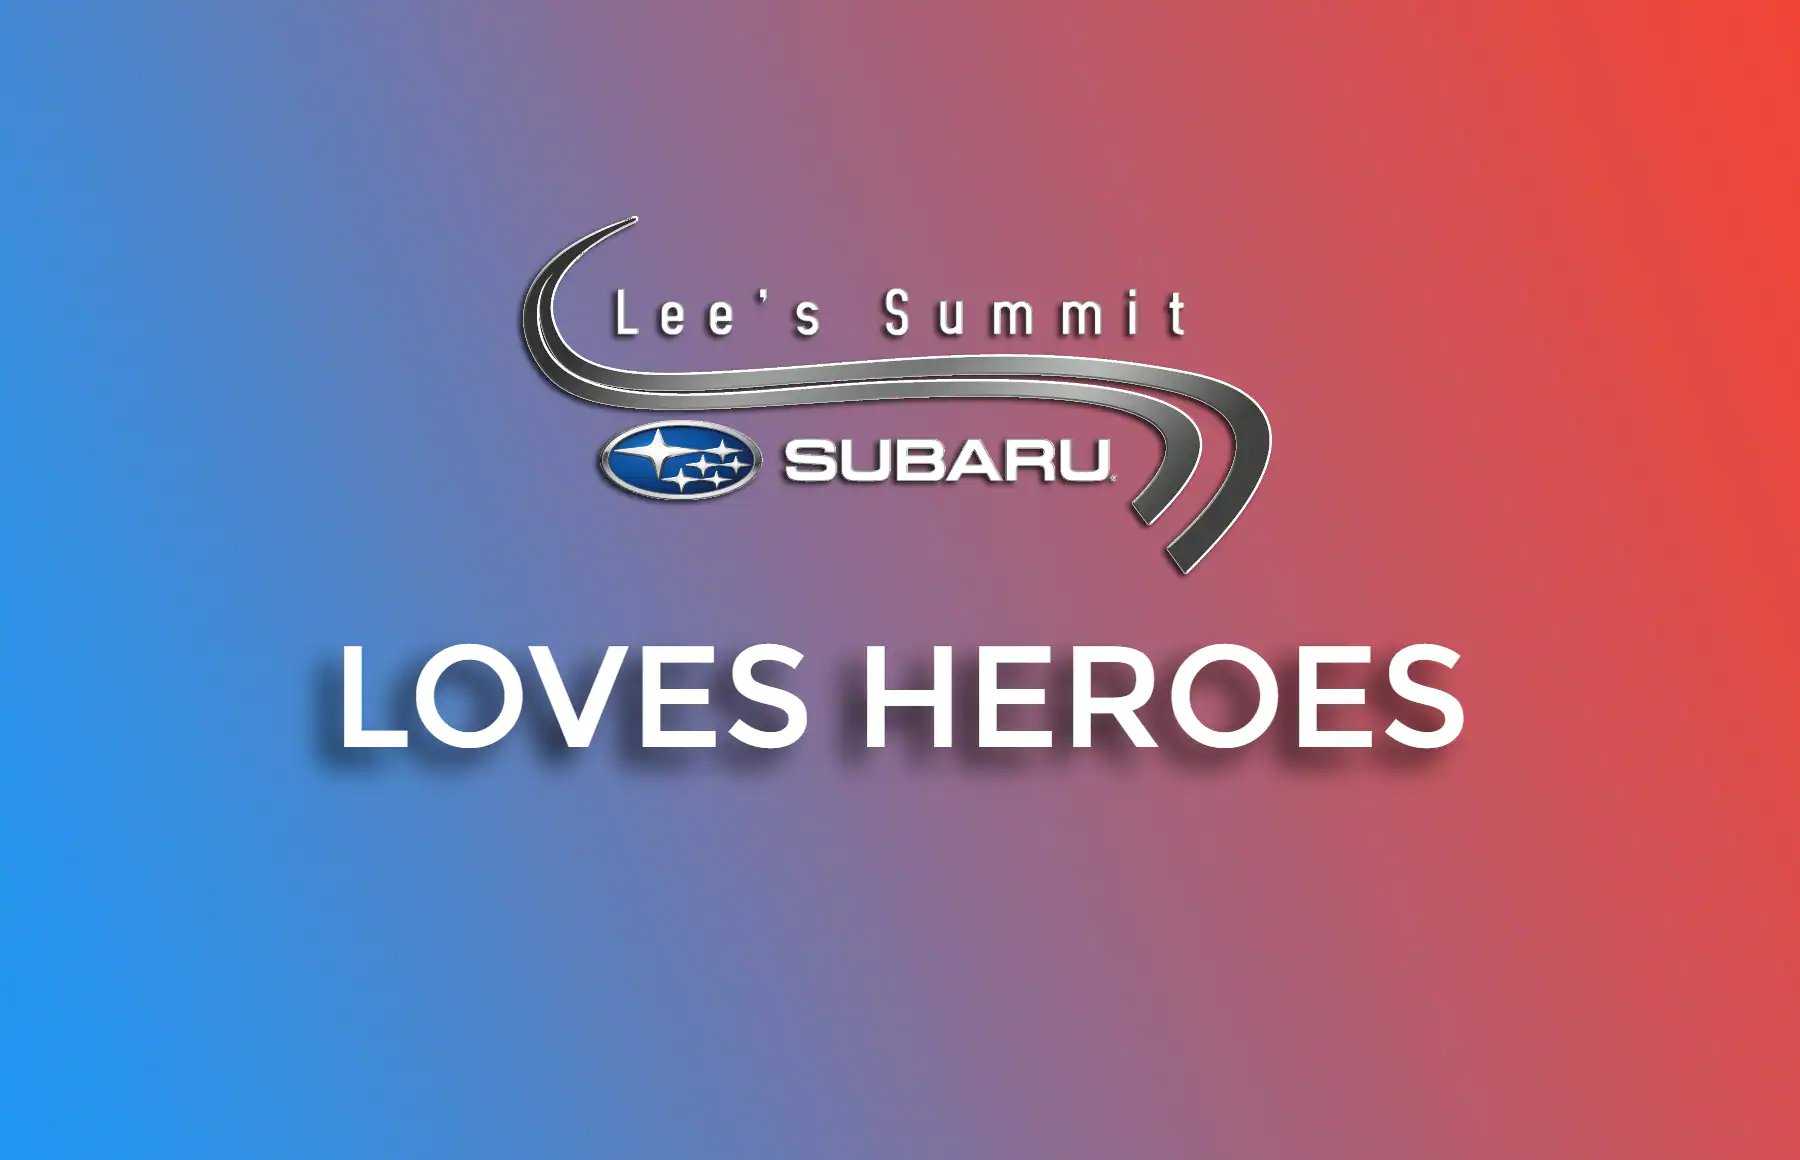 Lee's Summit Subaru Loves Heroes | Lee's Summit Subaru